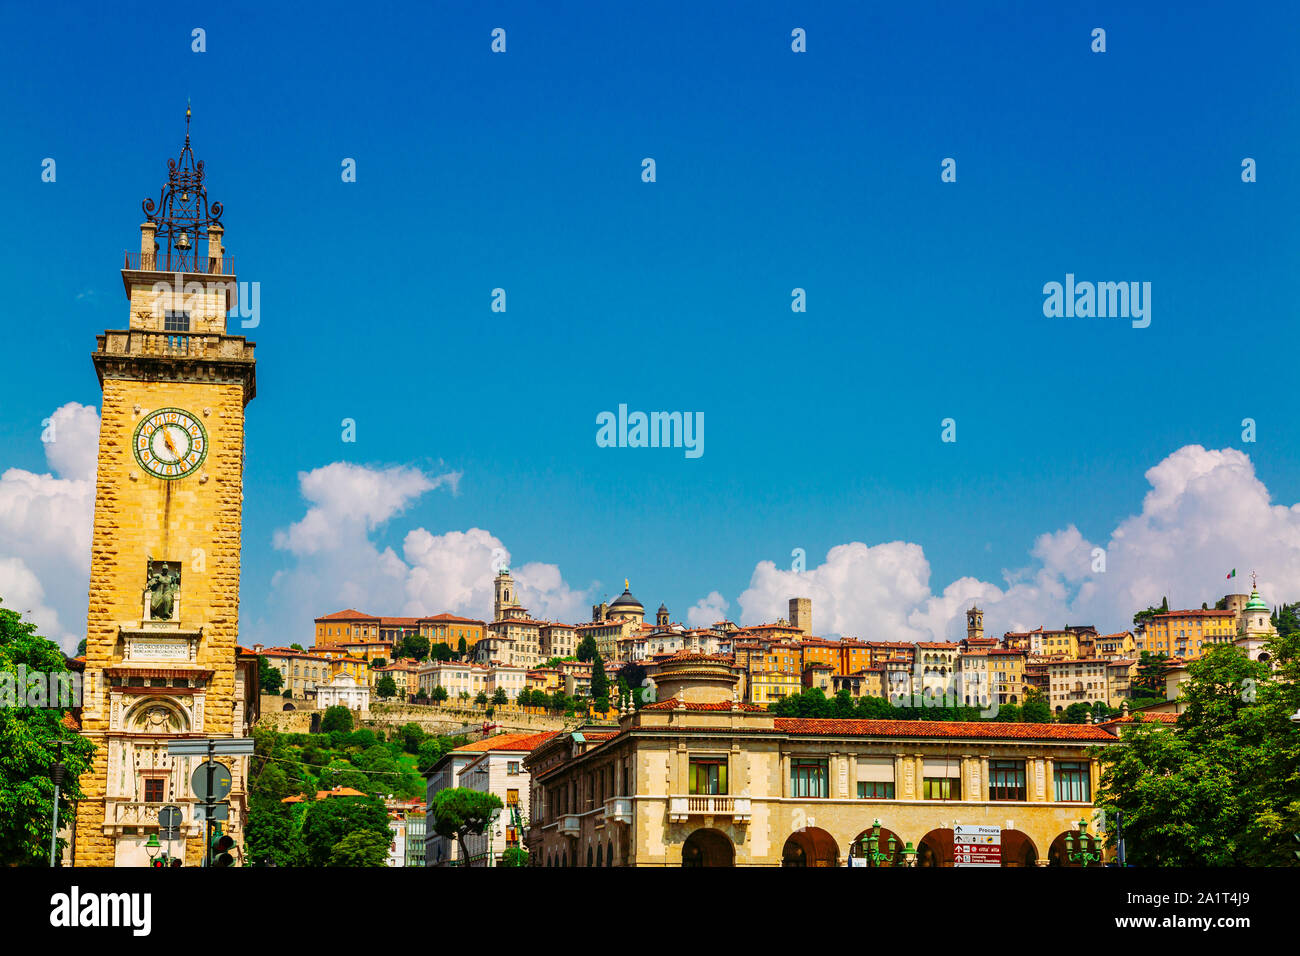 Citta Alta and clock tower in Bergamo city, Italy Stock Photo